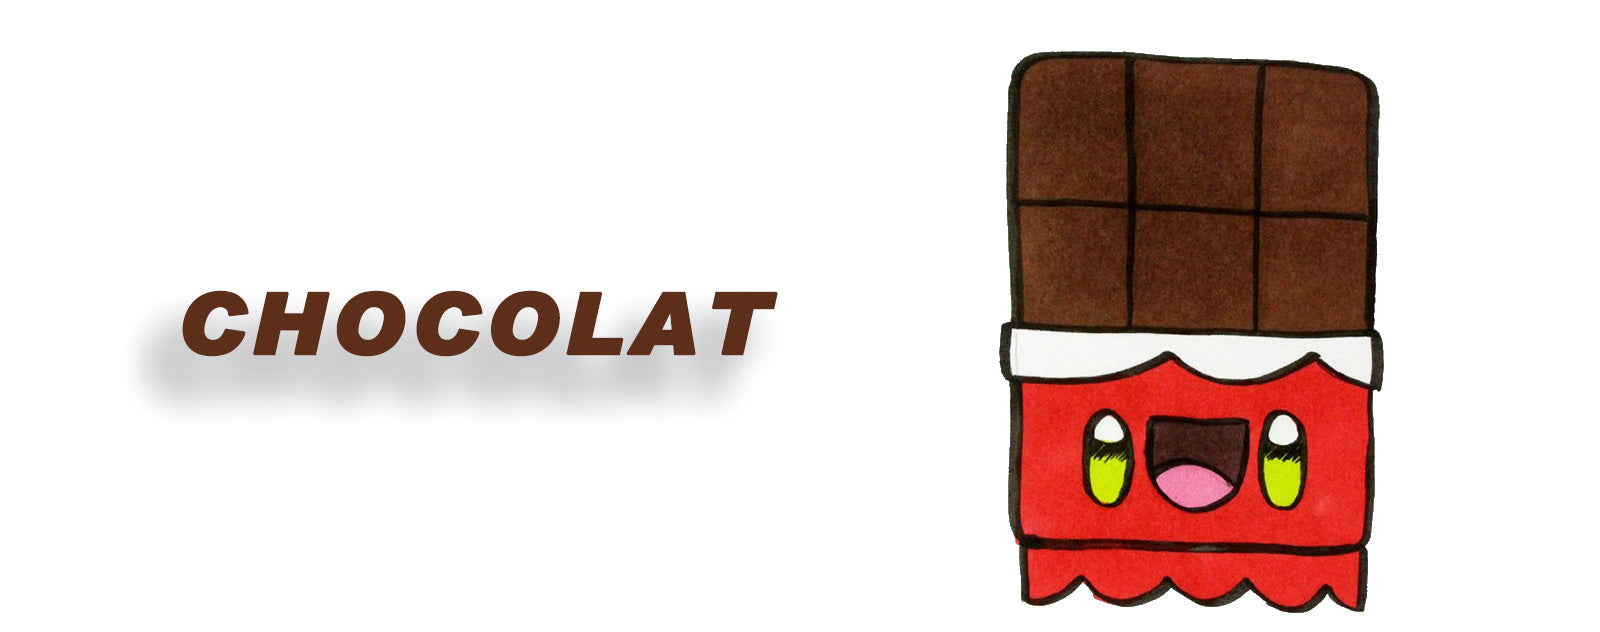 dessin kawaii nourriture tablette de chocolat